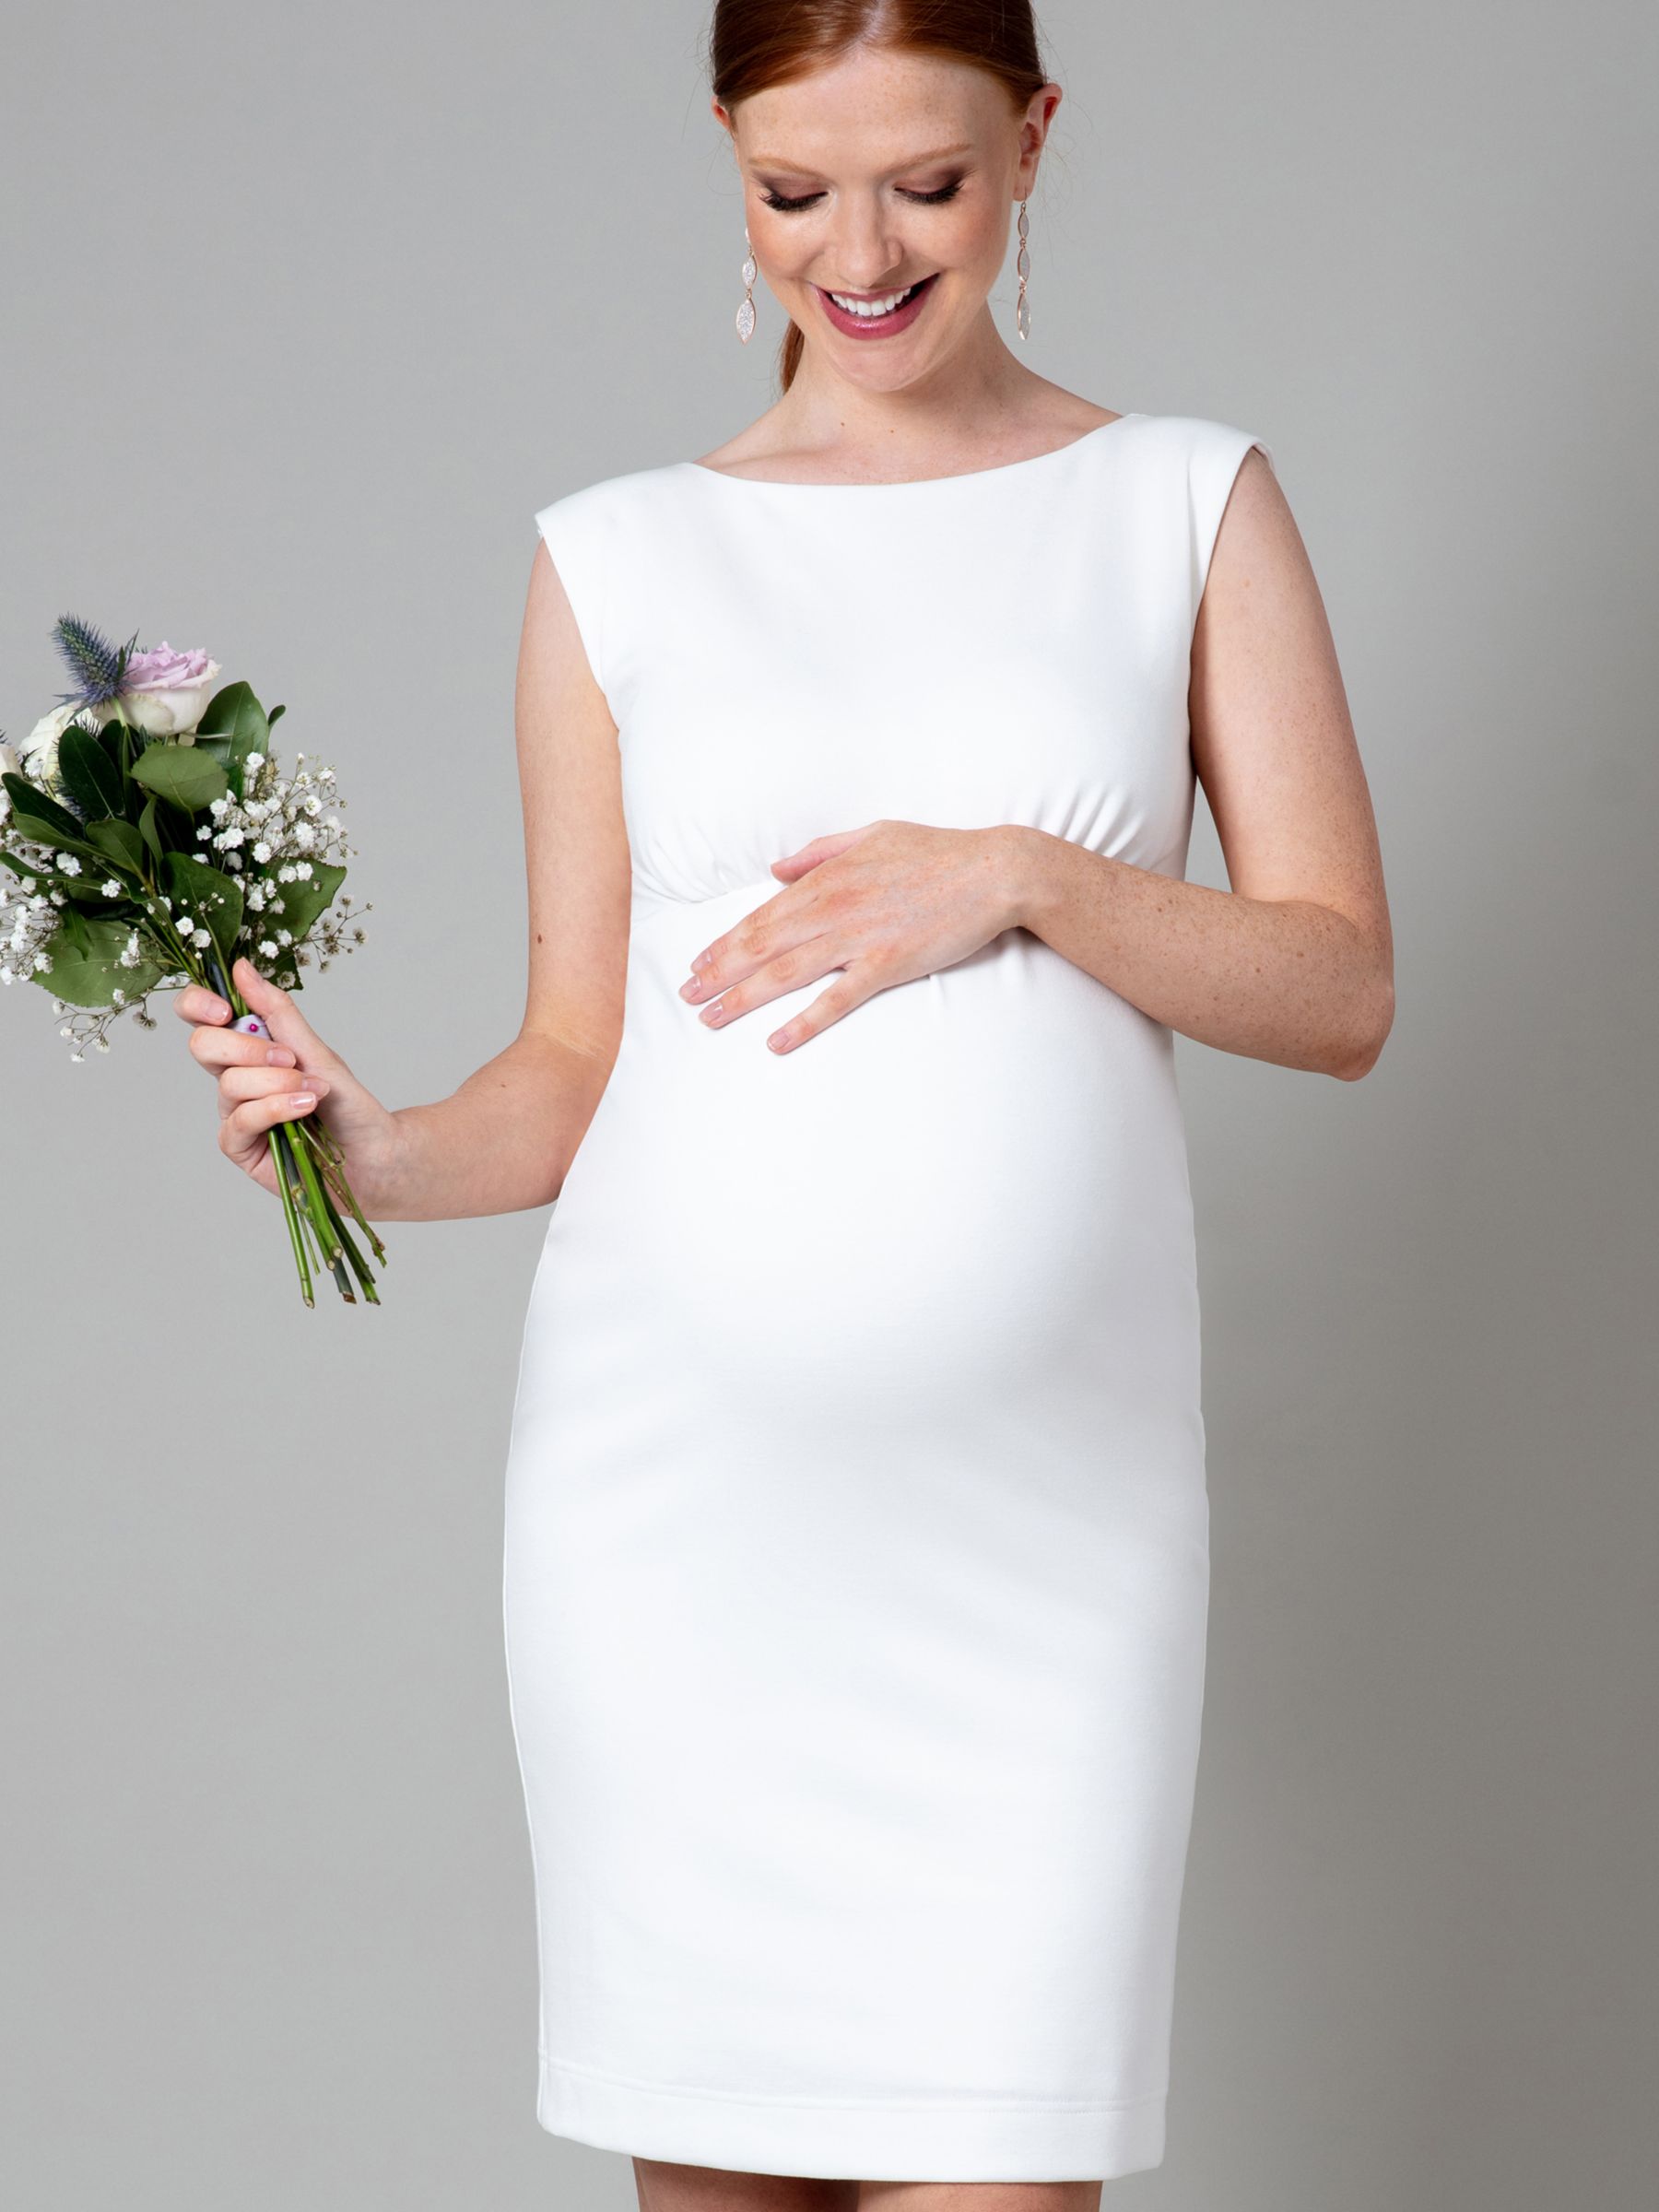 Tiffany Rose Lauren Maternity Wedding Dress, Ivory, 6-8